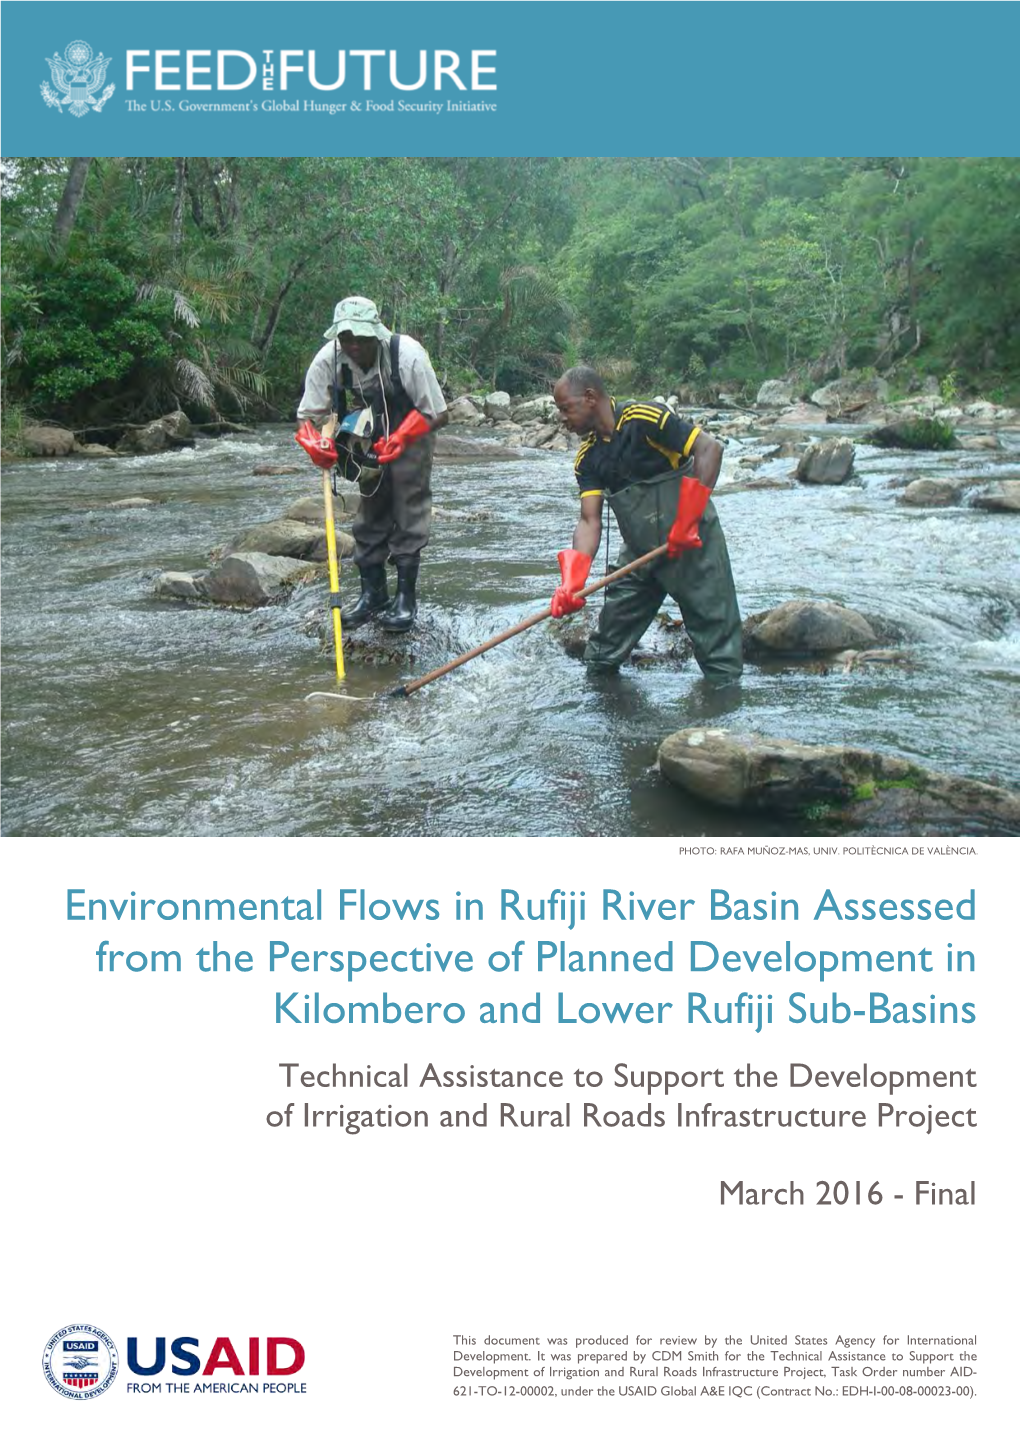 Environmental Flows Assessment in Rufiji River Basin